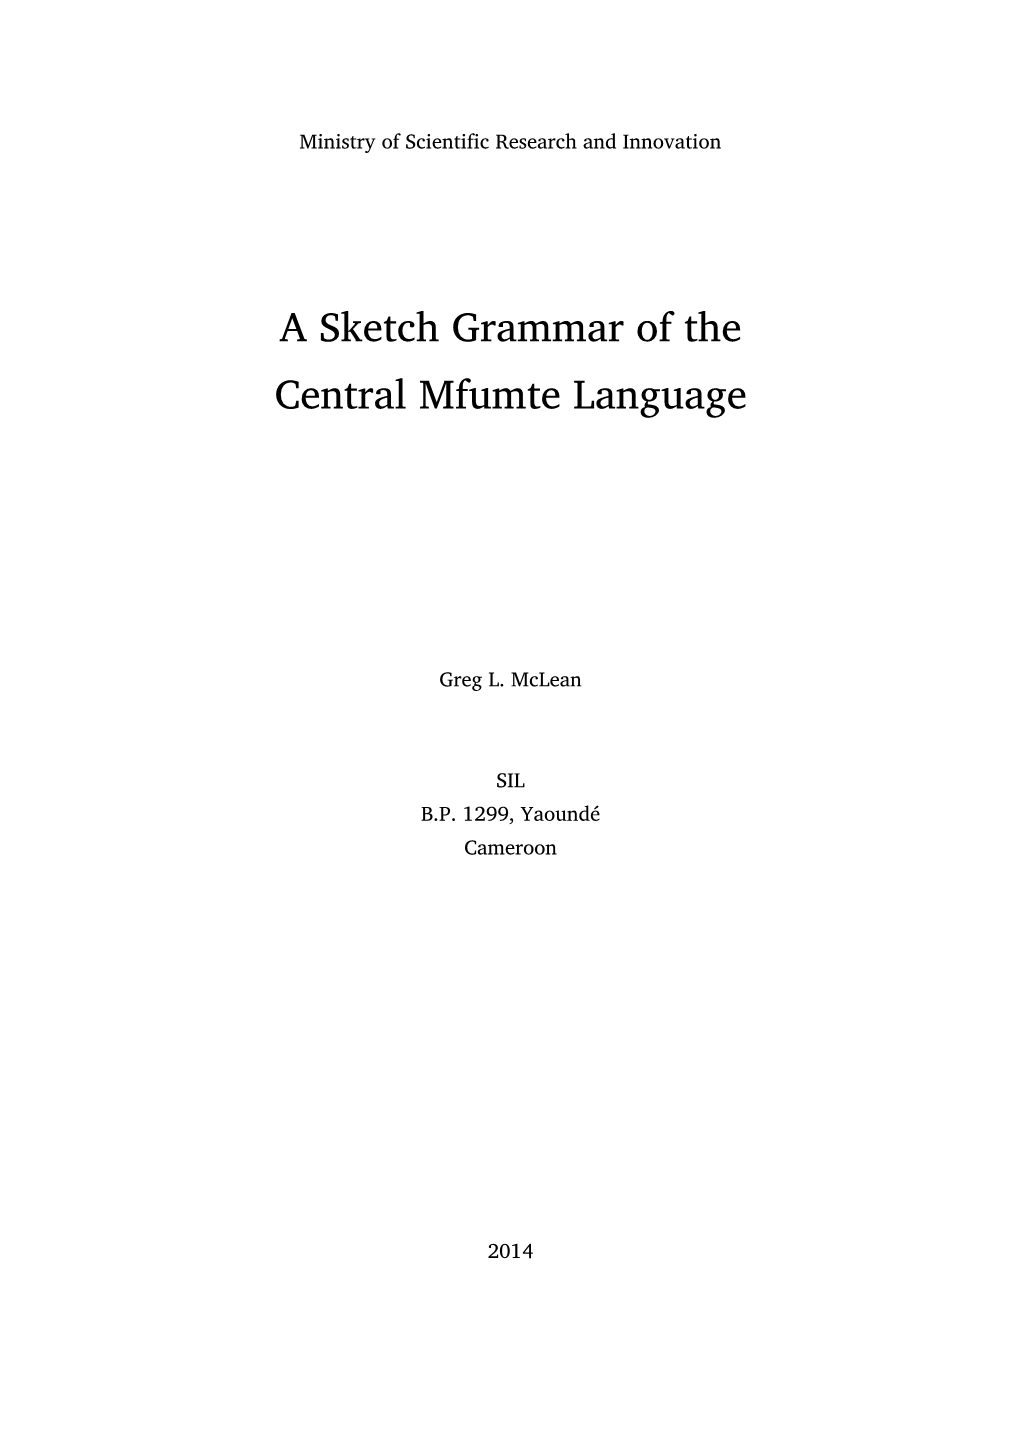 A Sketch Grammar of the Central Mfumte Language